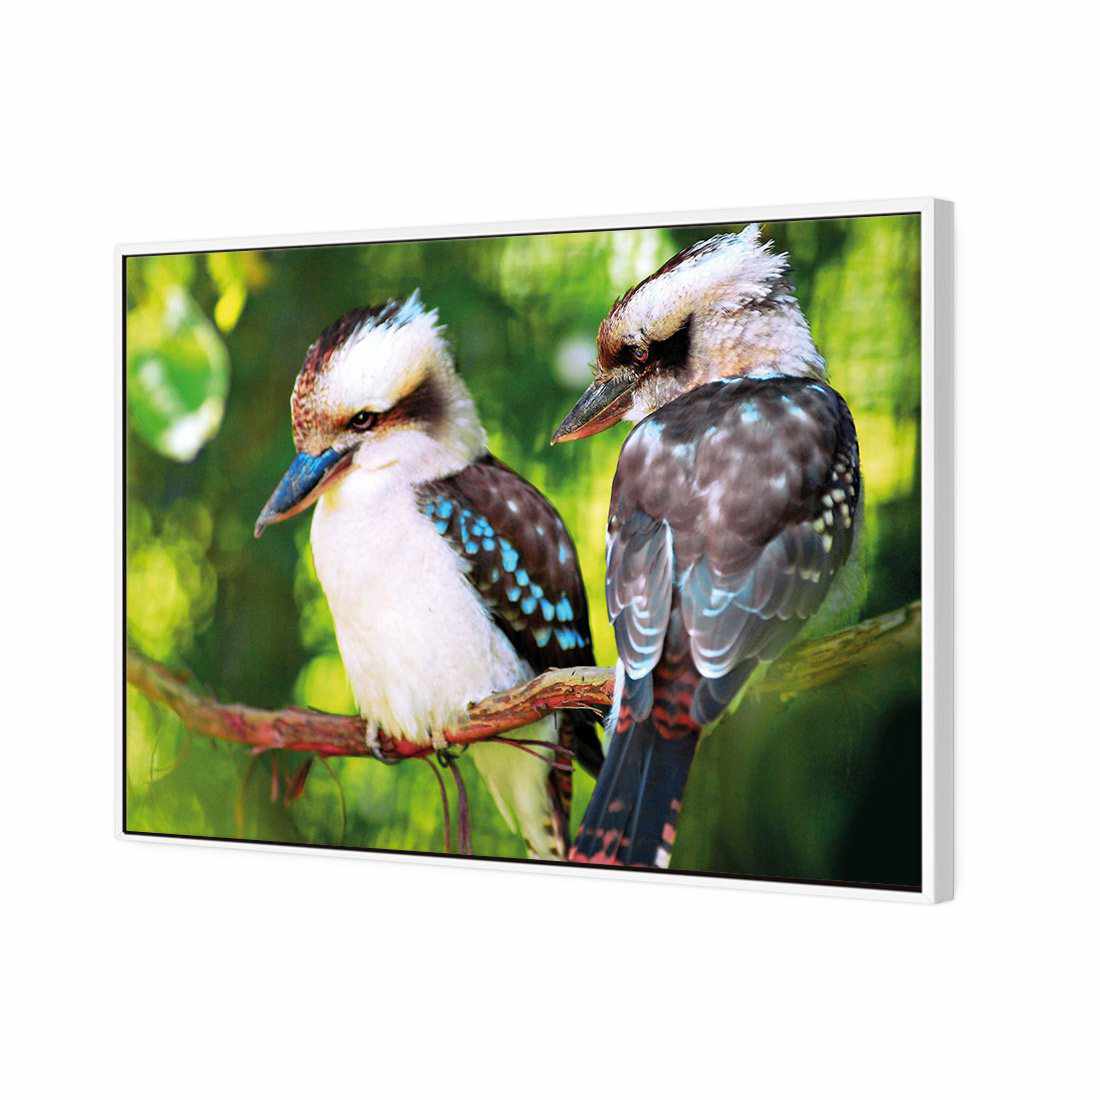 Kookaburra Pair Canvas Art-Canvas-Wall Art Designs-45x30cm-Canvas - White Frame-Wall Art Designs